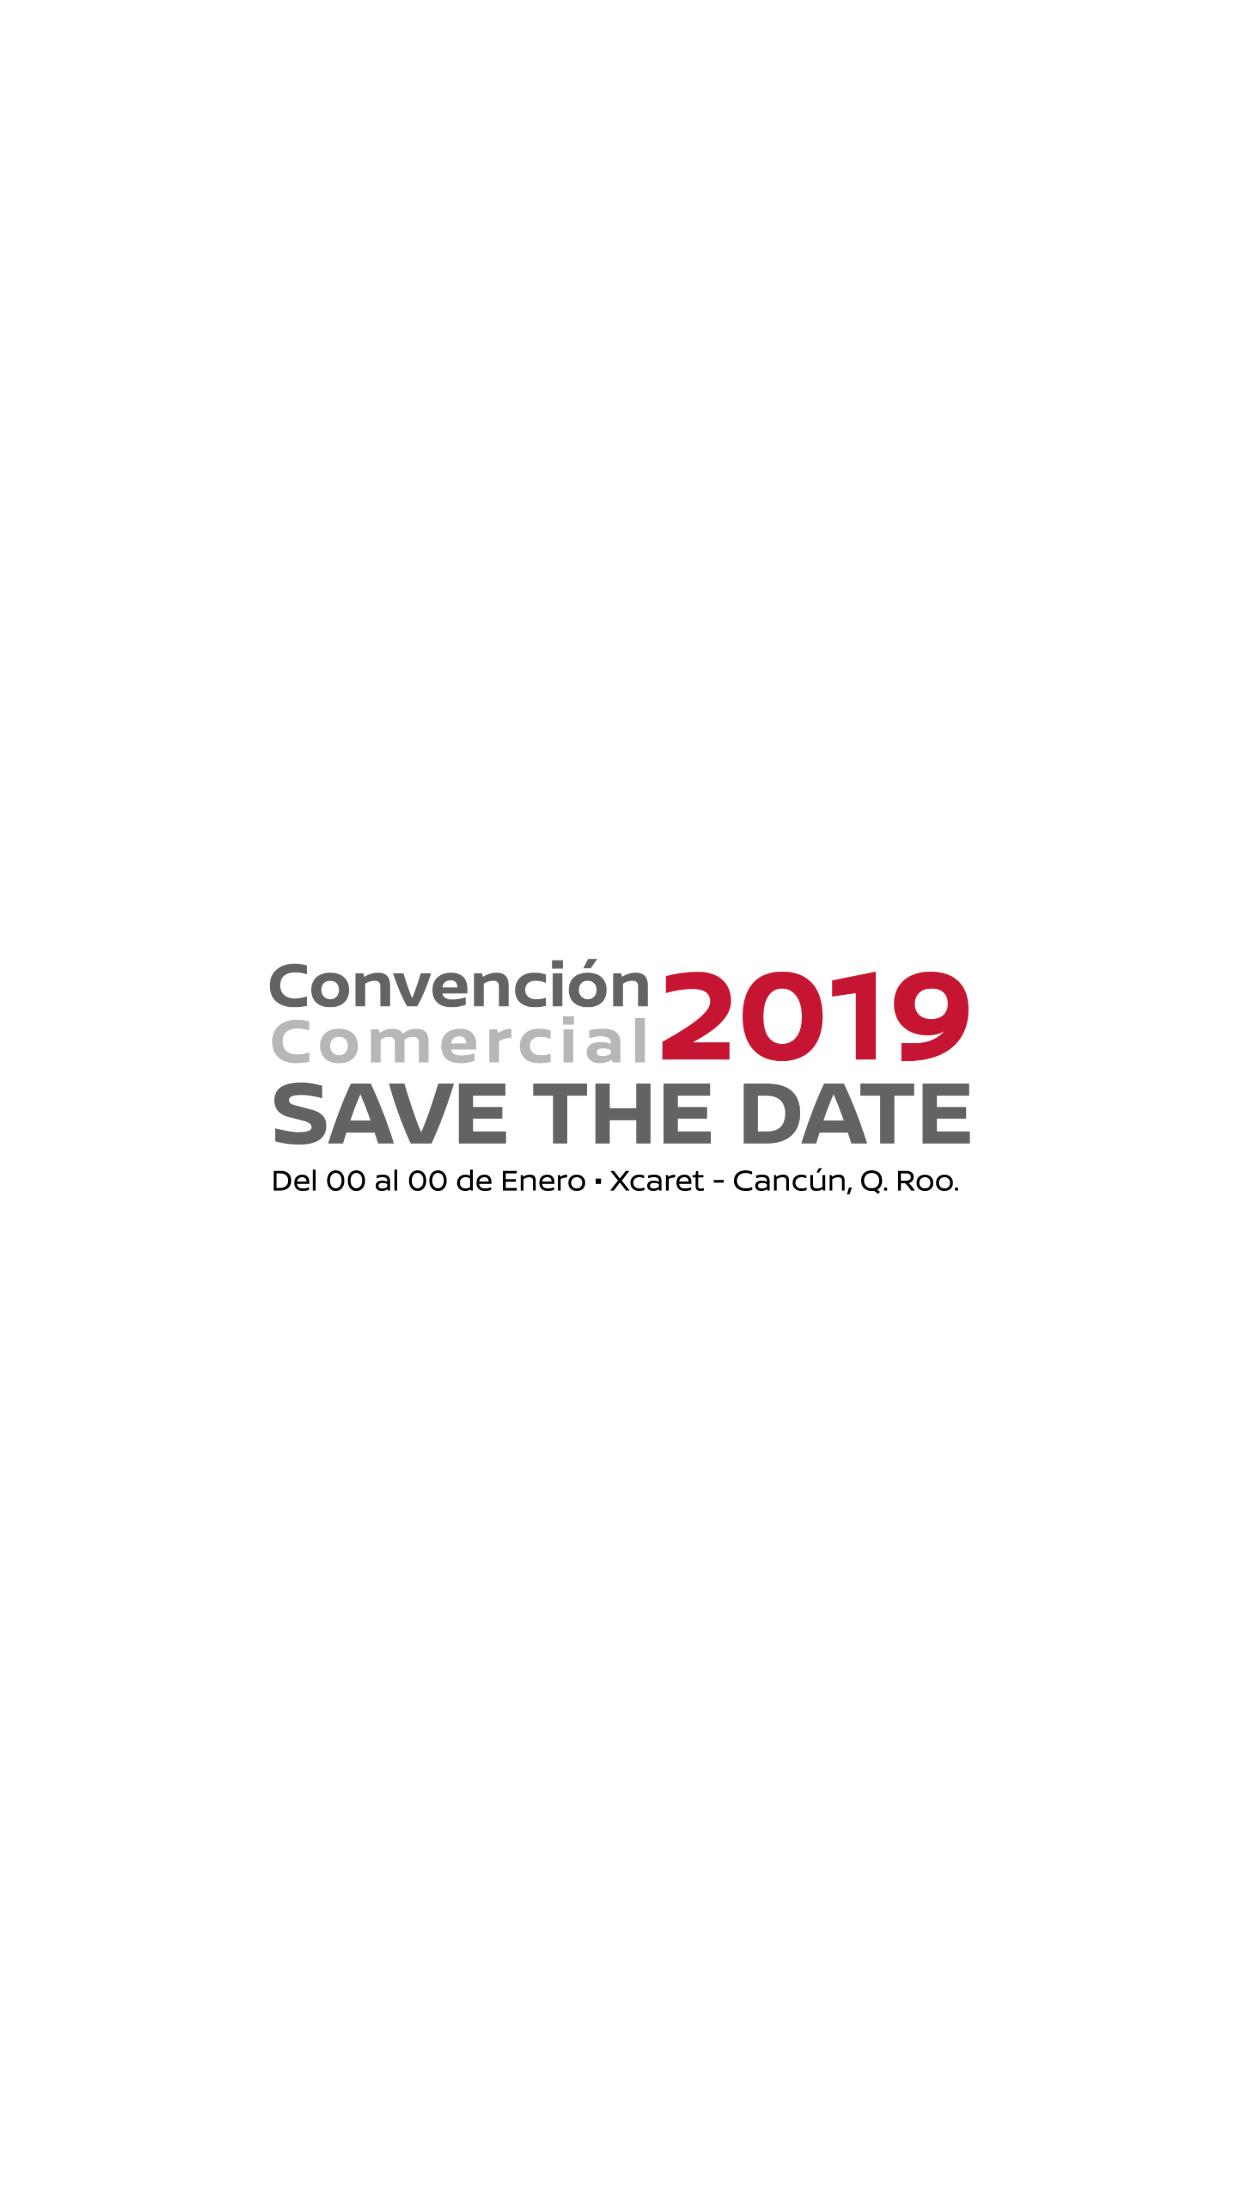 Convencion Comercial 2019 For Android Apk Download